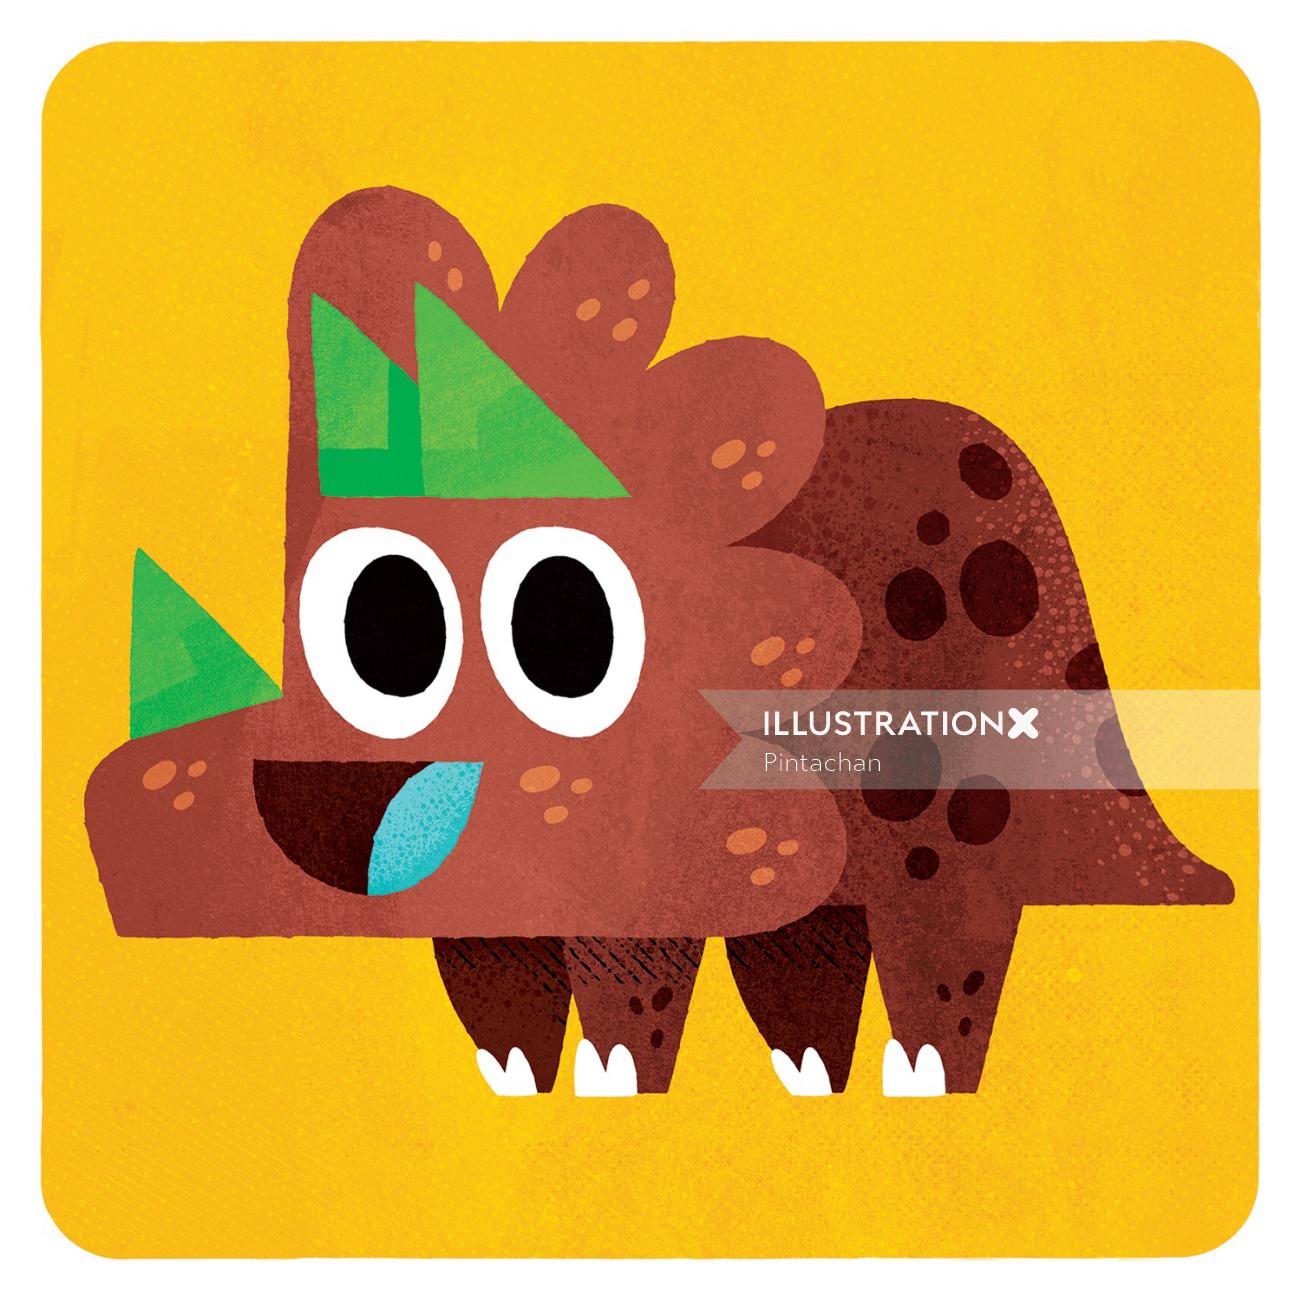 Dinosaur illustration by Pintachan